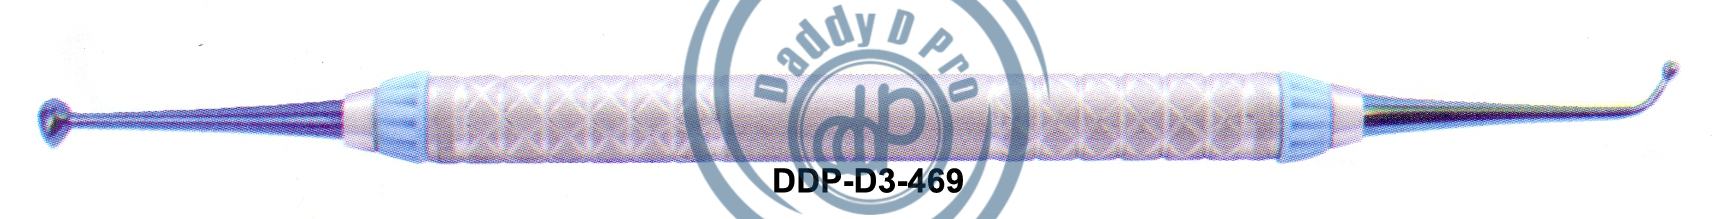 images/DDP-D3-469.png